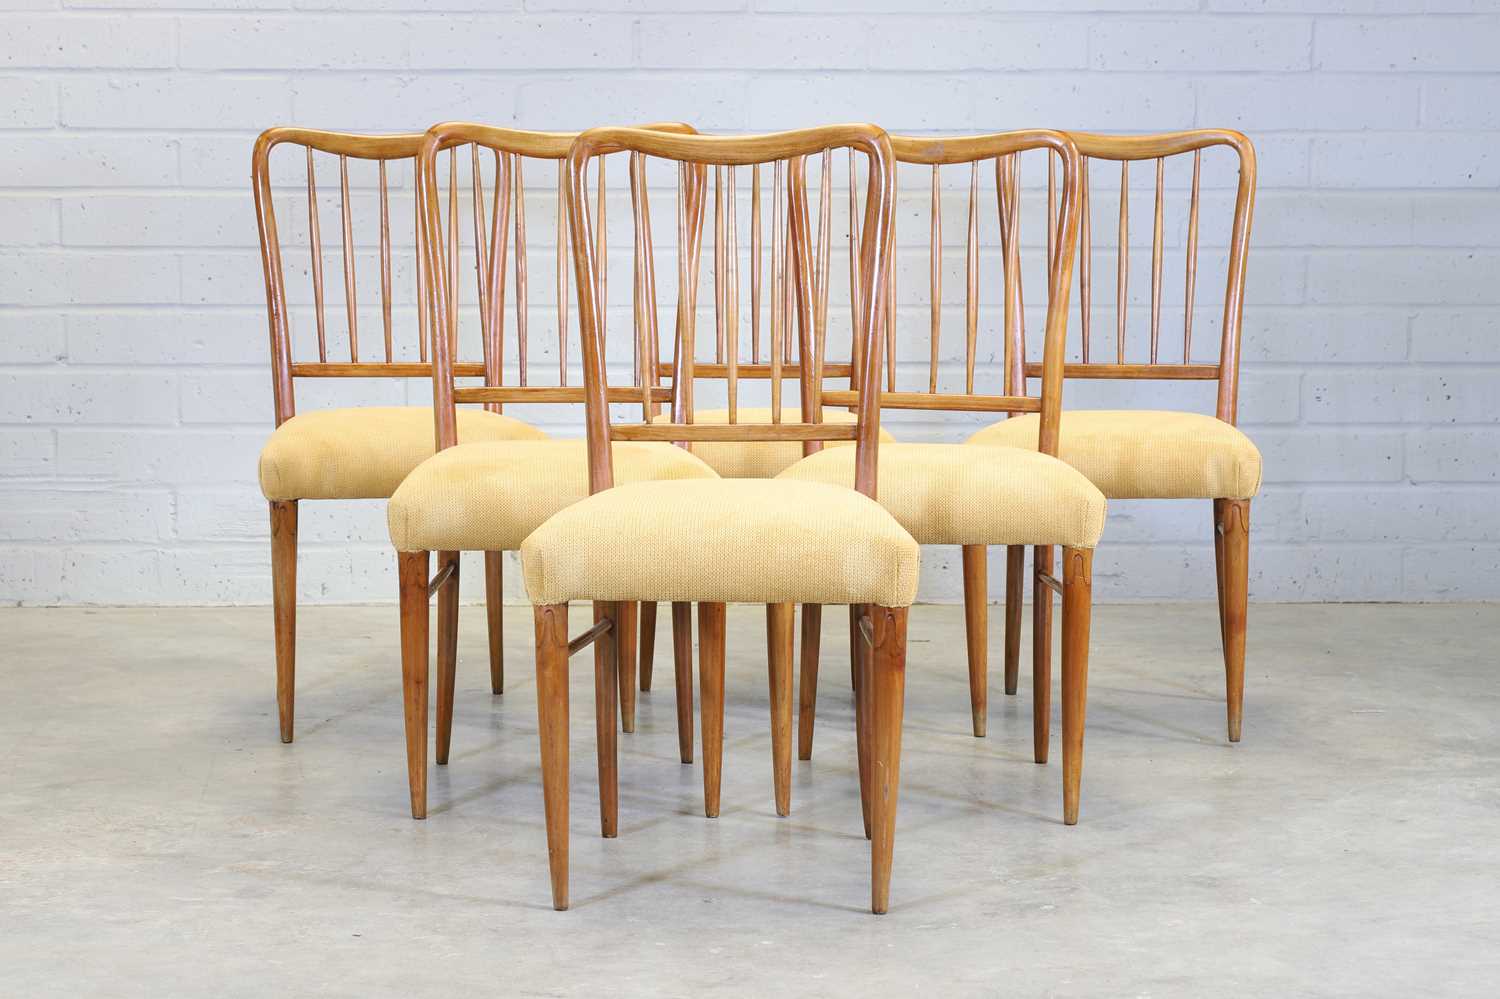 A set of six Italian fruitwood chairs,